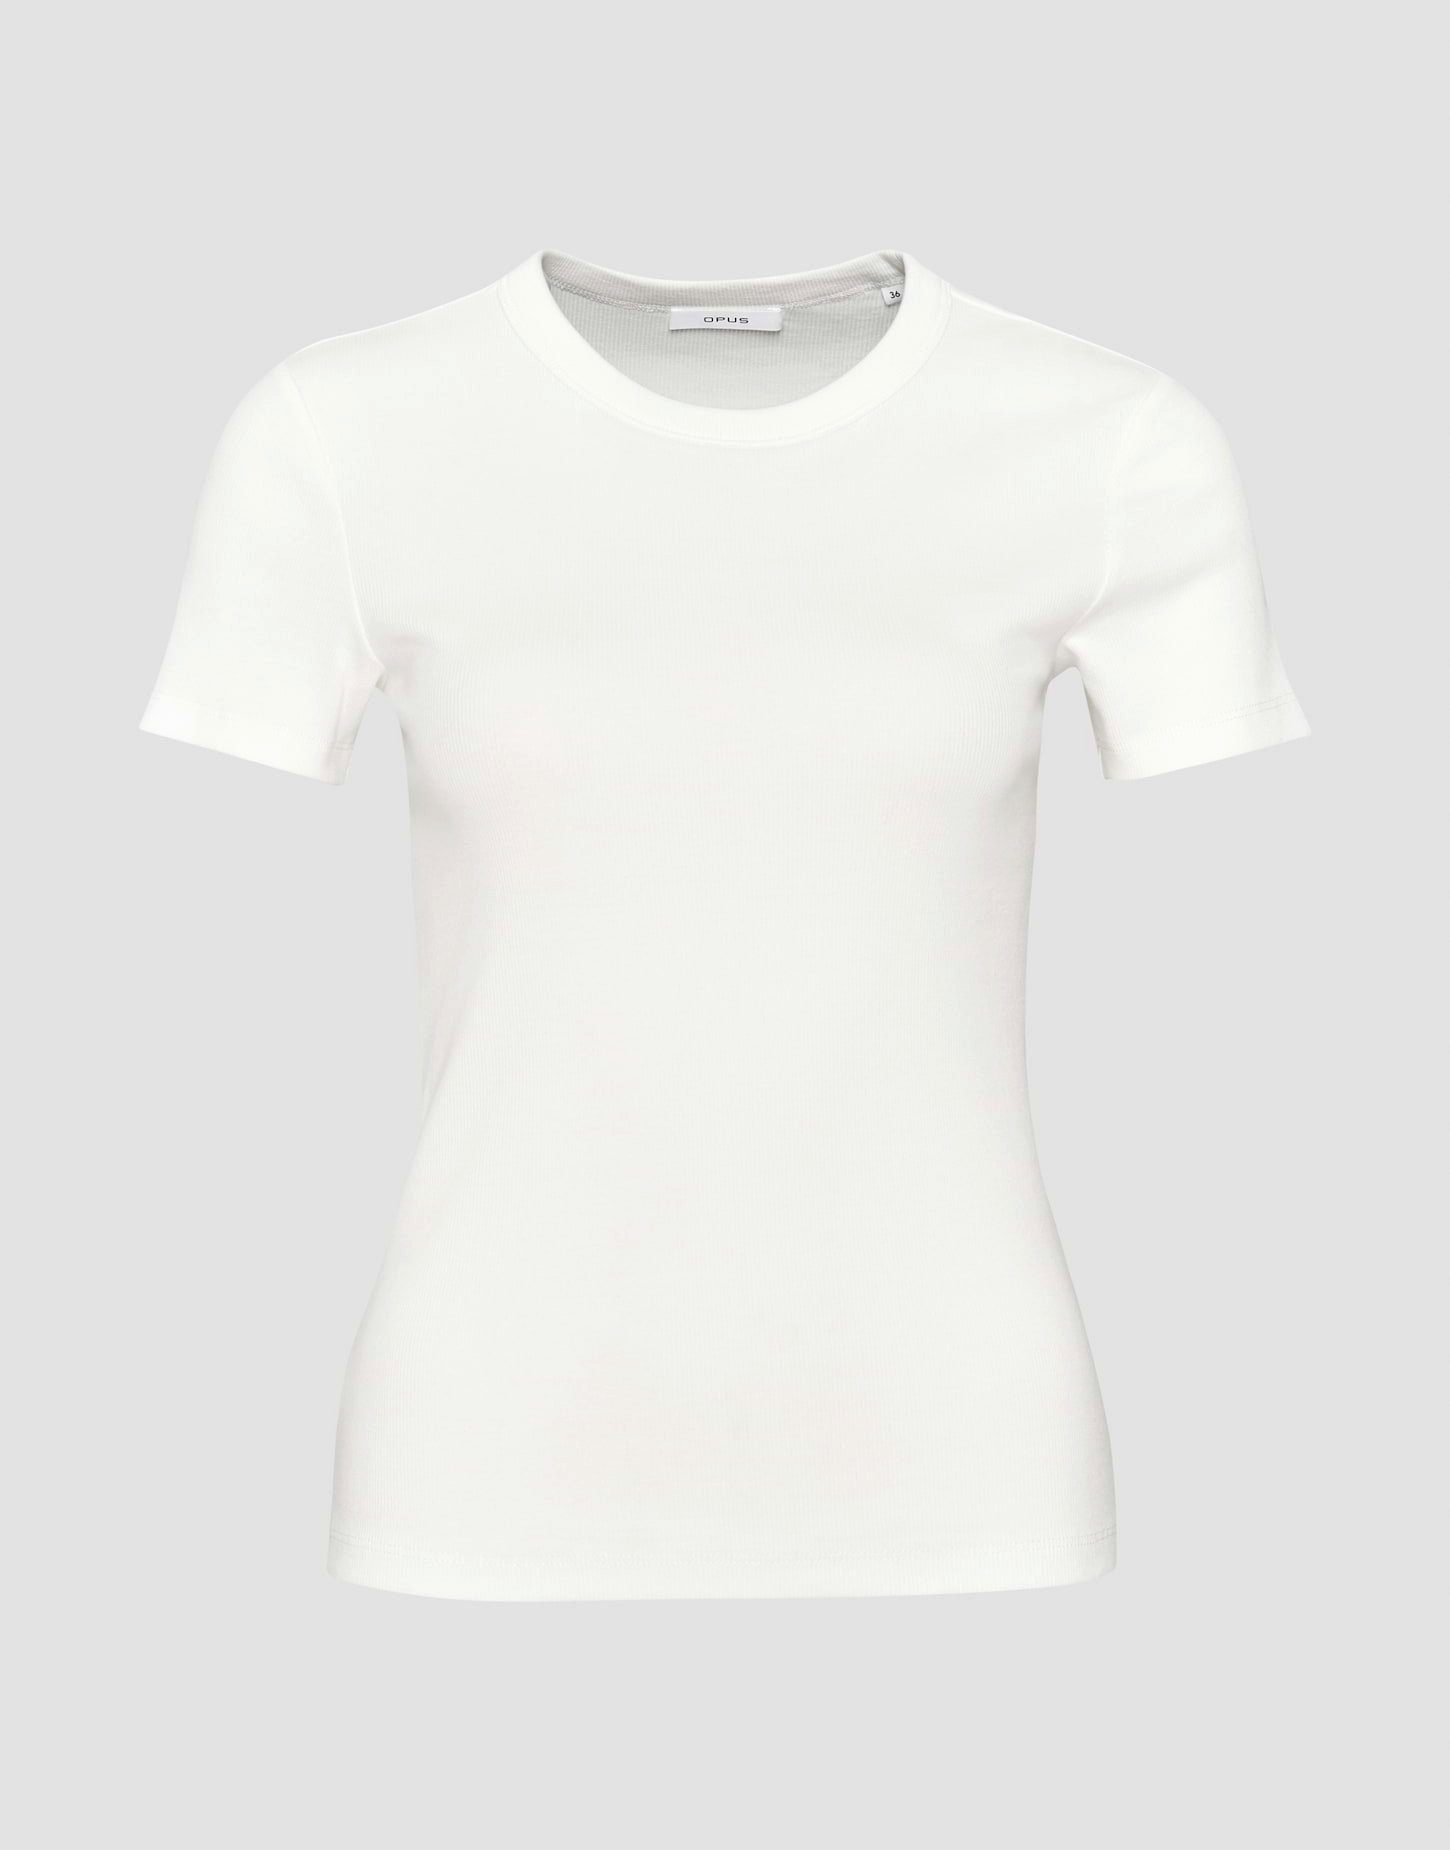 OPUS T-Shirt OPUS / Da.Sweatshirt / Samuna 1004 milk